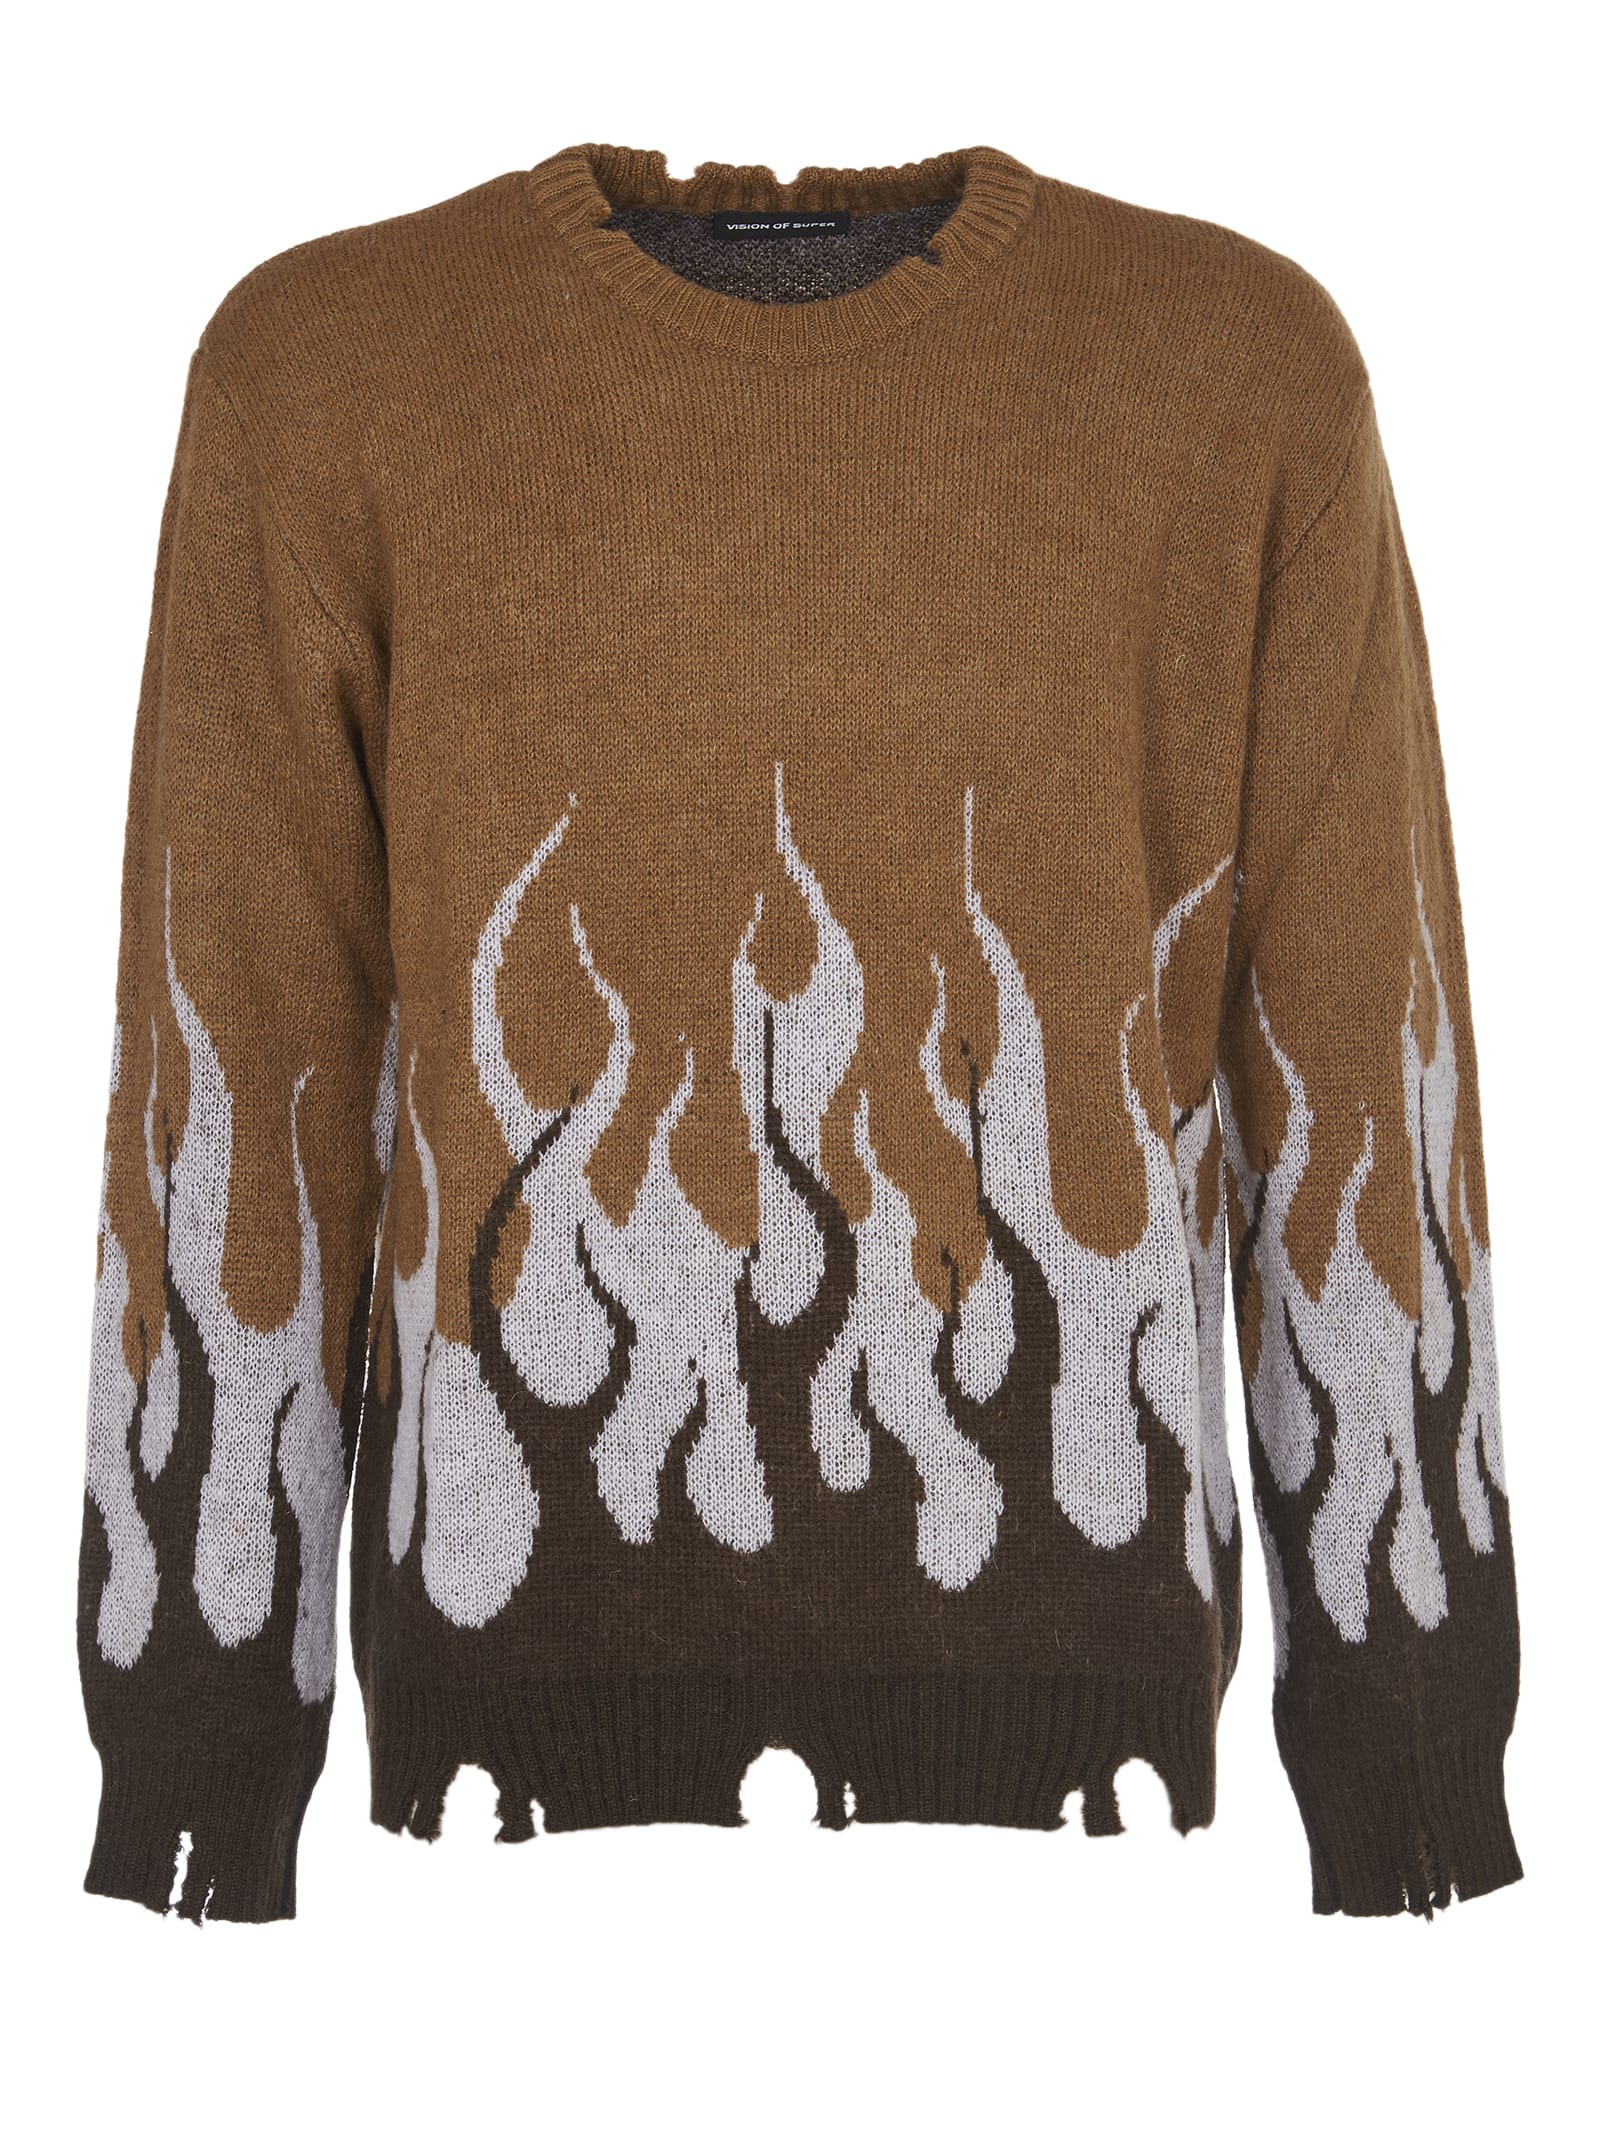 Vision of Super Multicolor Jacquard Flames Sweater